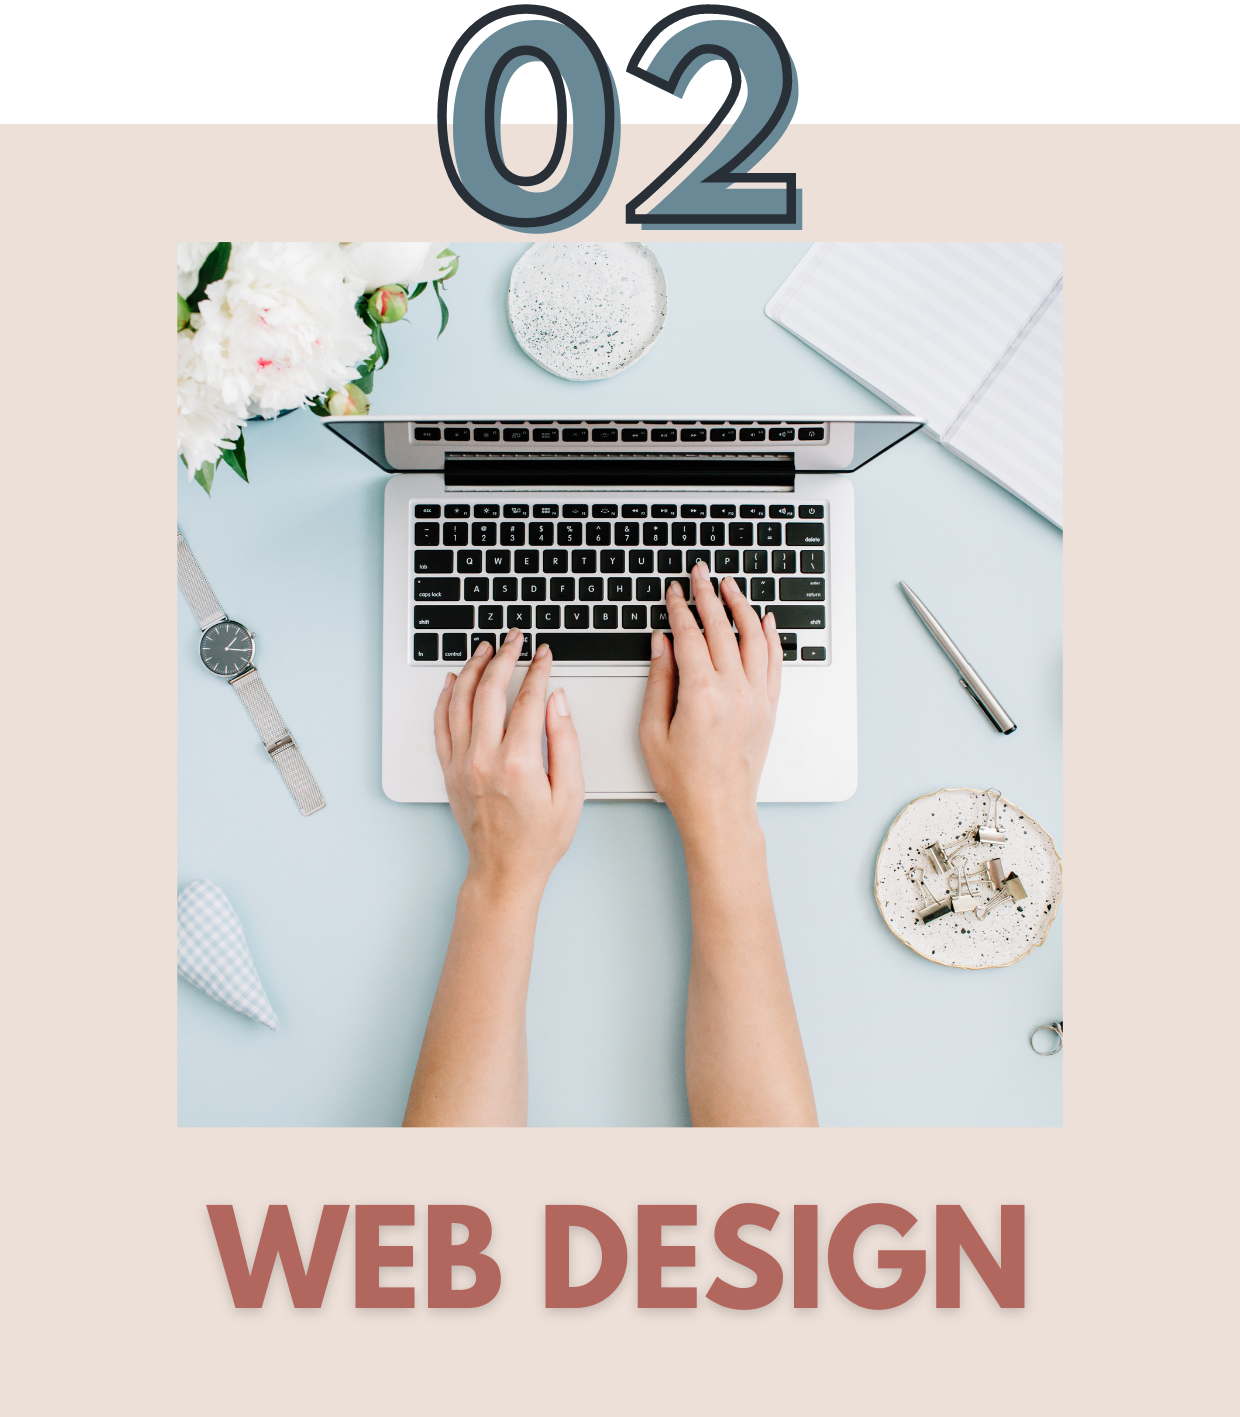 Web Design Services Homepage